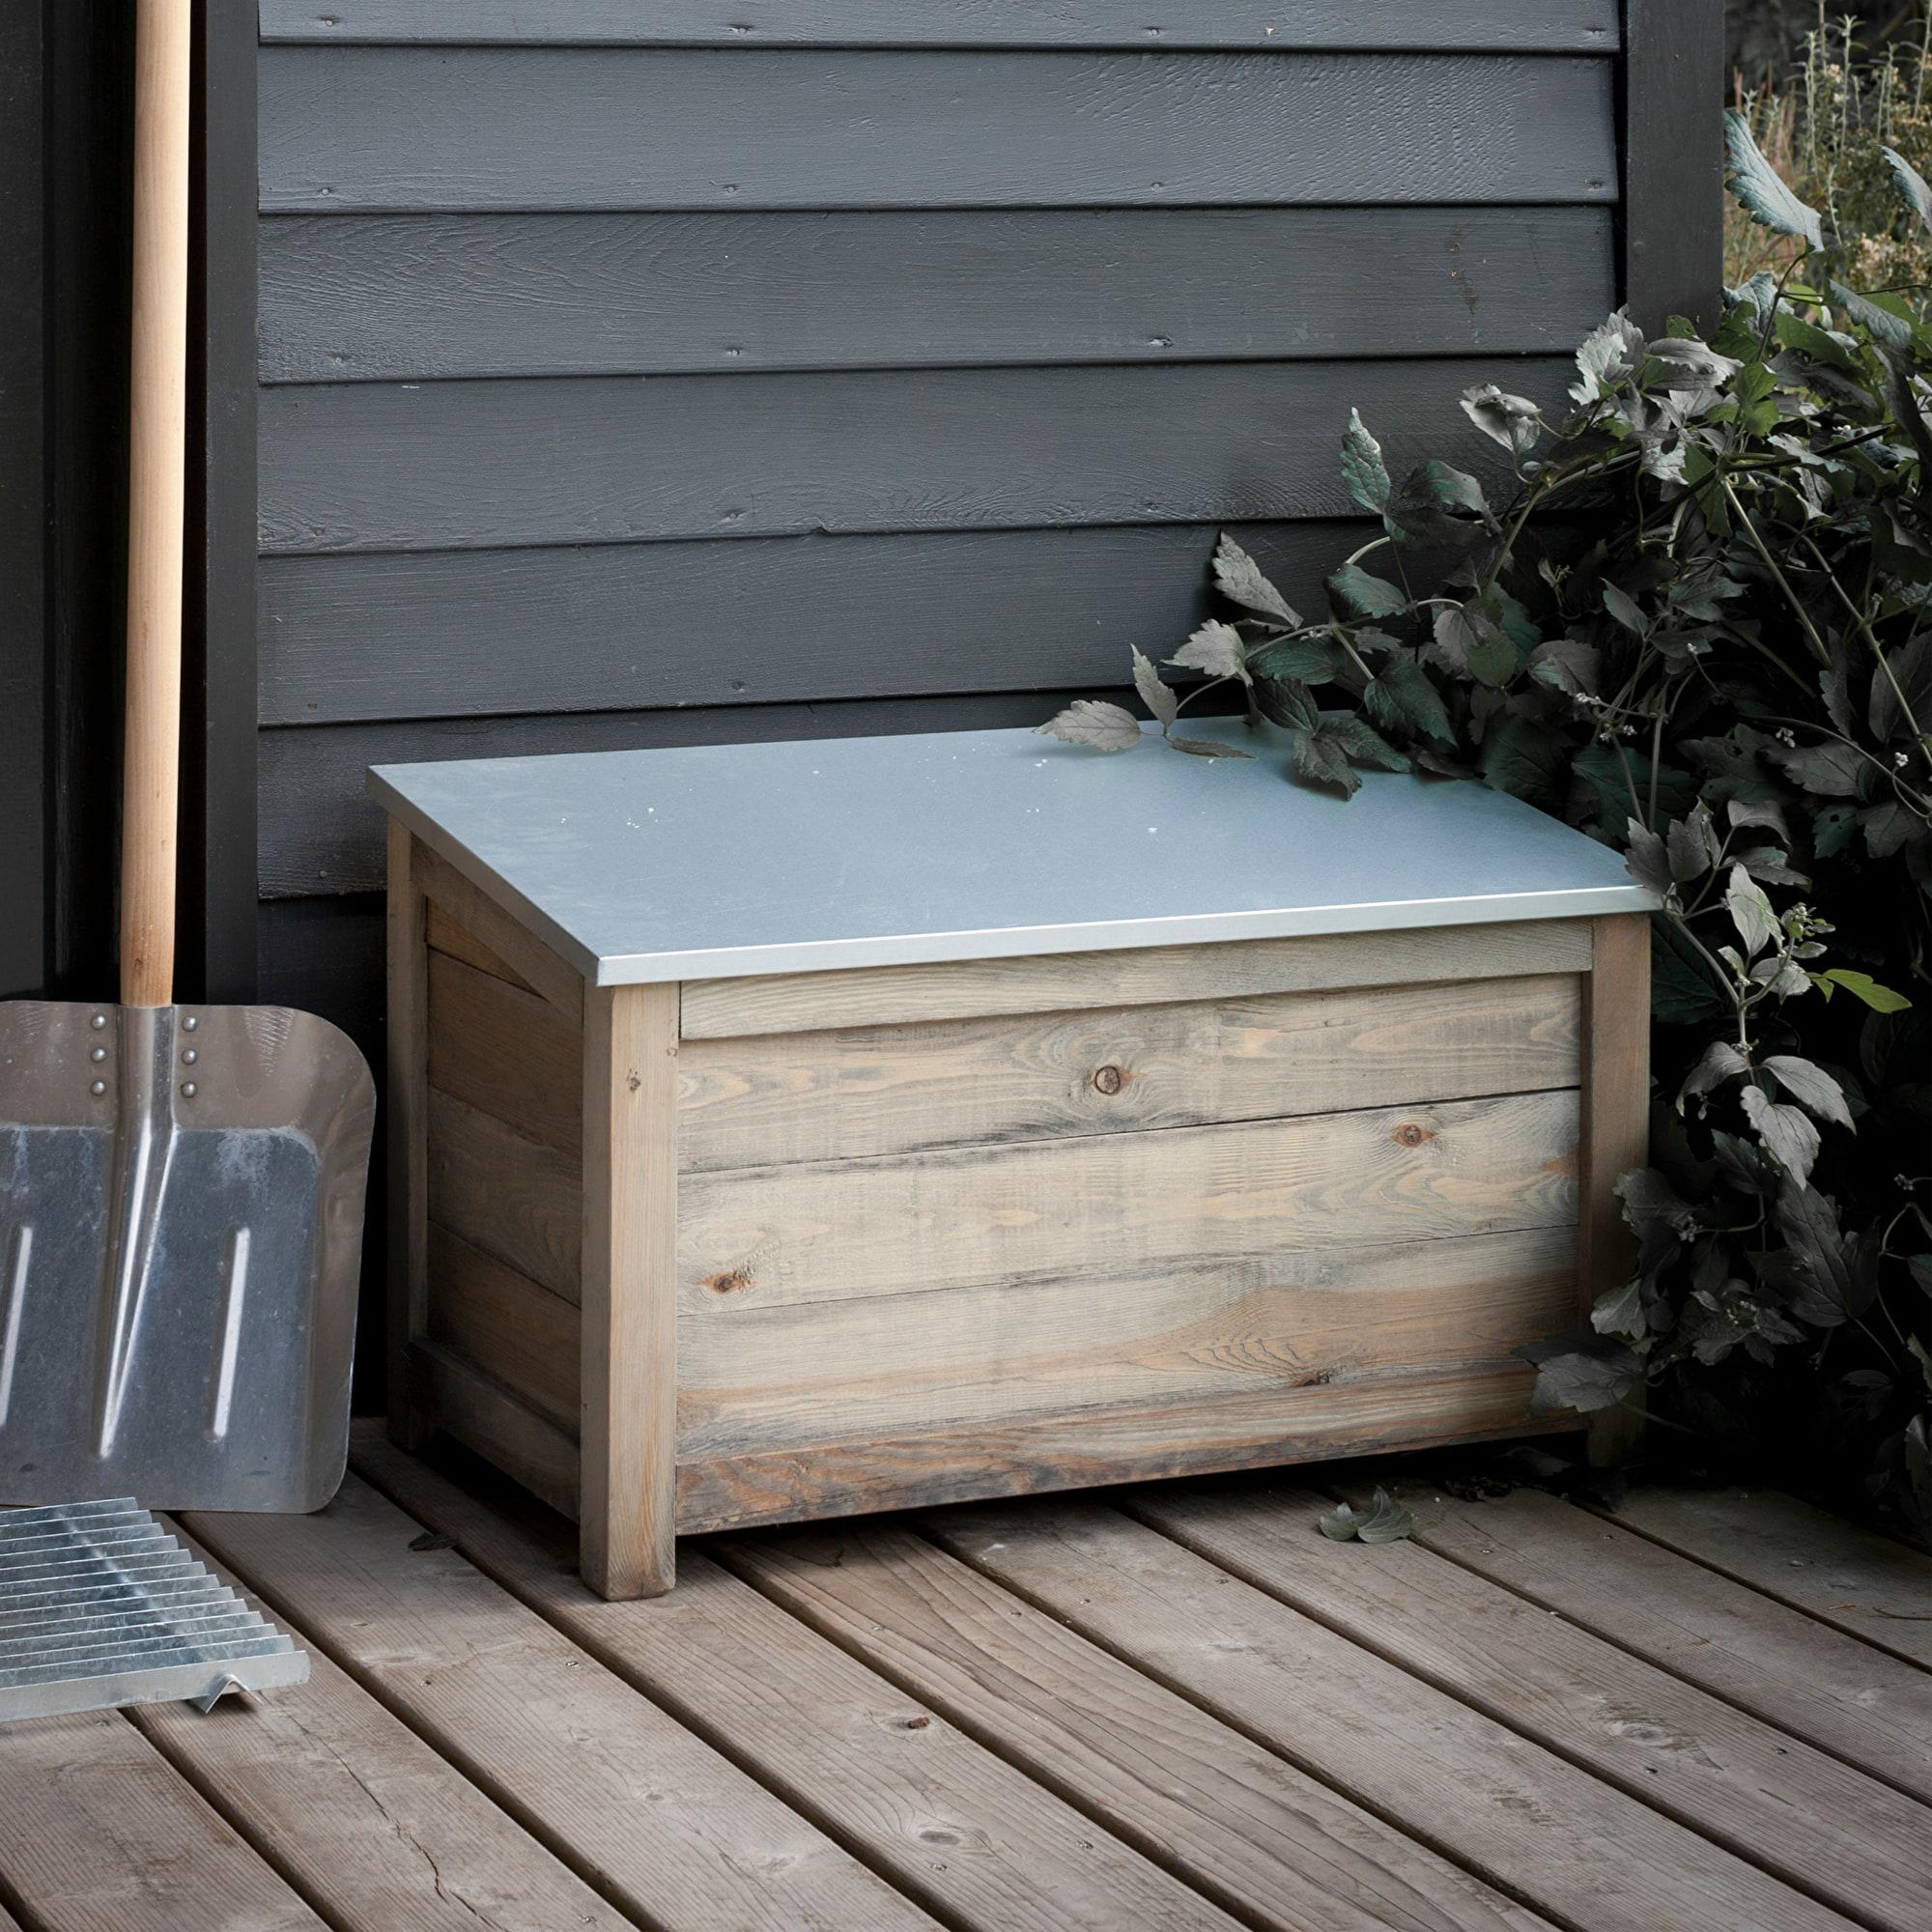 Favorite Diy Wooden Garden Storage Box Any Wood Plan